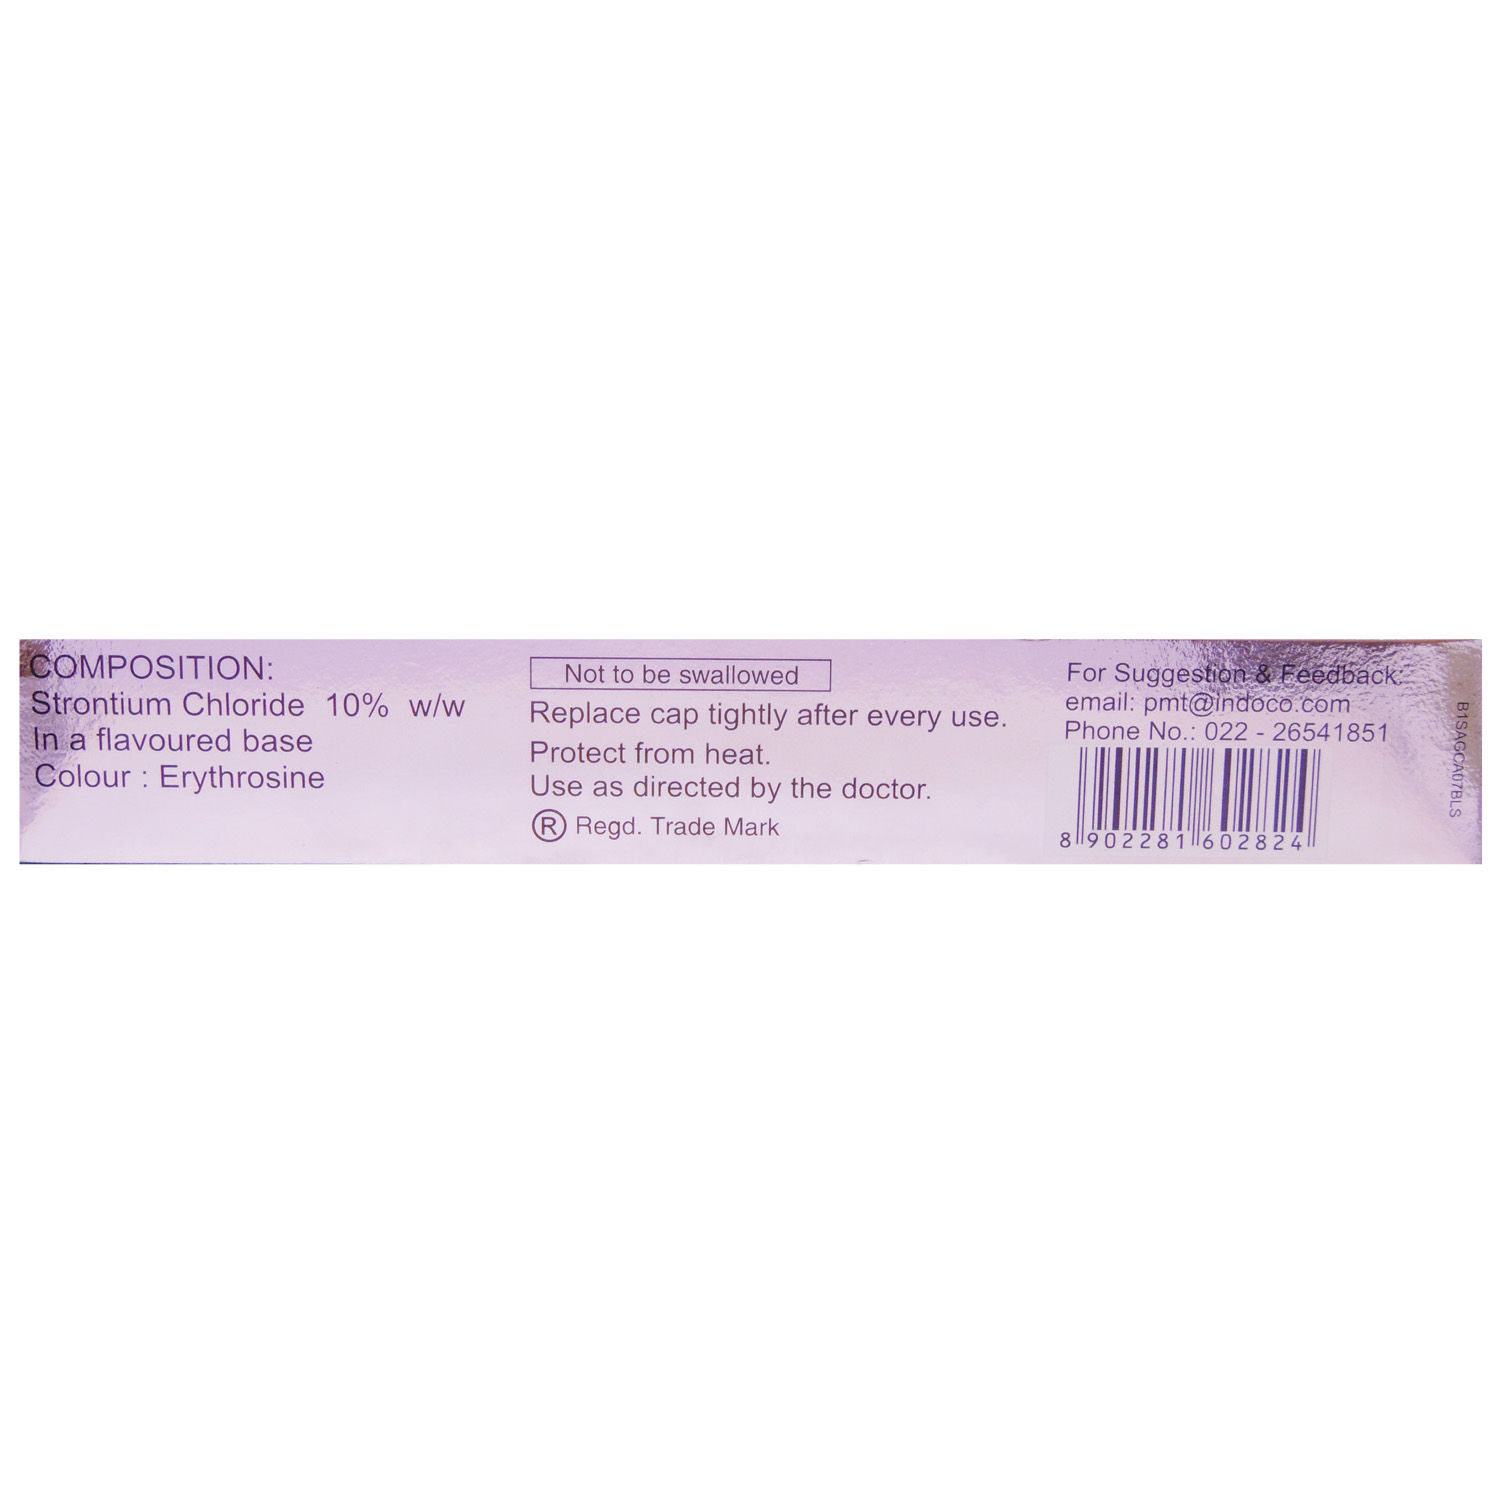 Sensoform Medicated Dental Cream, 100 gm, Pack of 1 